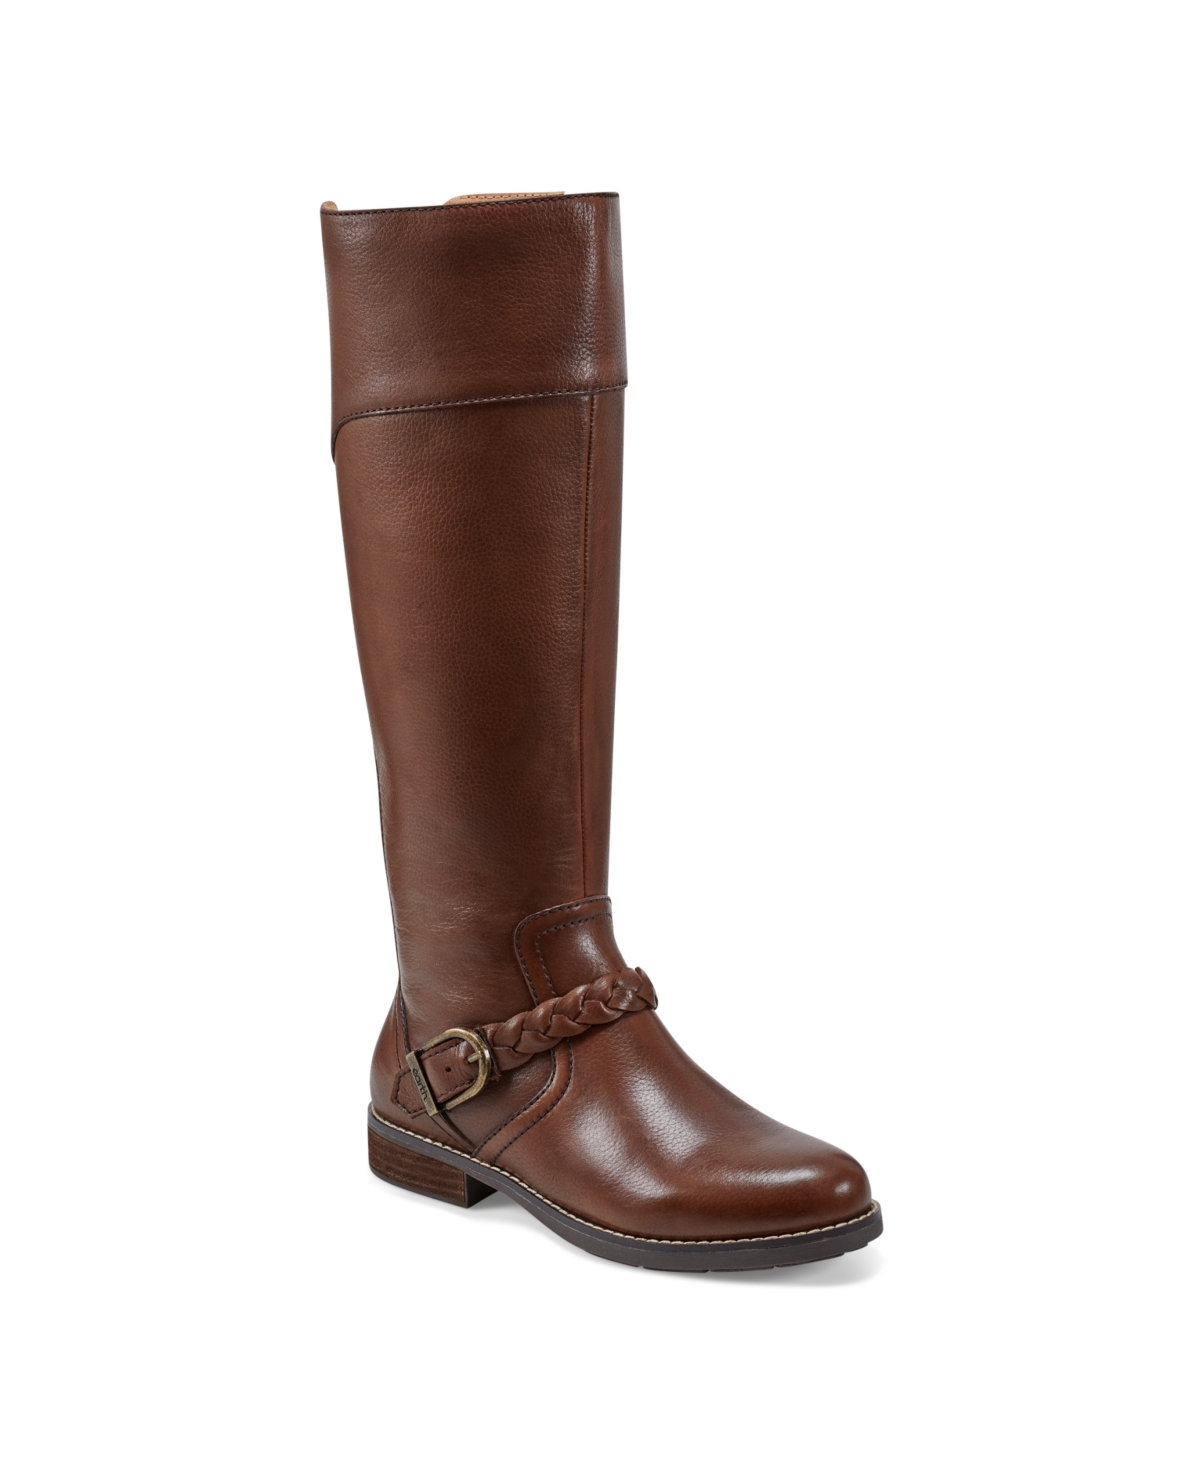 Earth Women's Mira Round Toe High Shaft Casual Regular Calf Boots - Medium Brown Leather